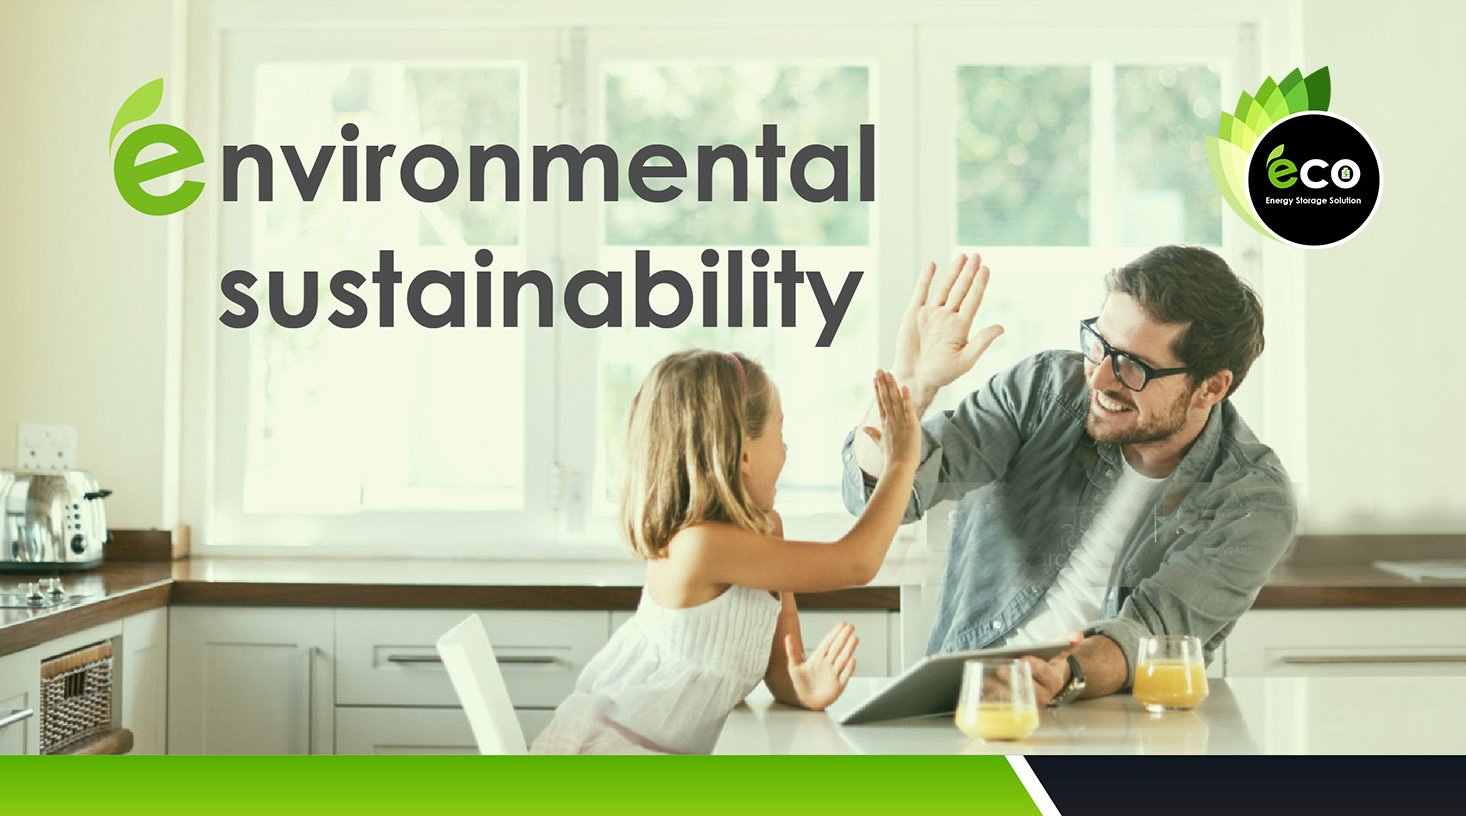 Environmental Sustainability